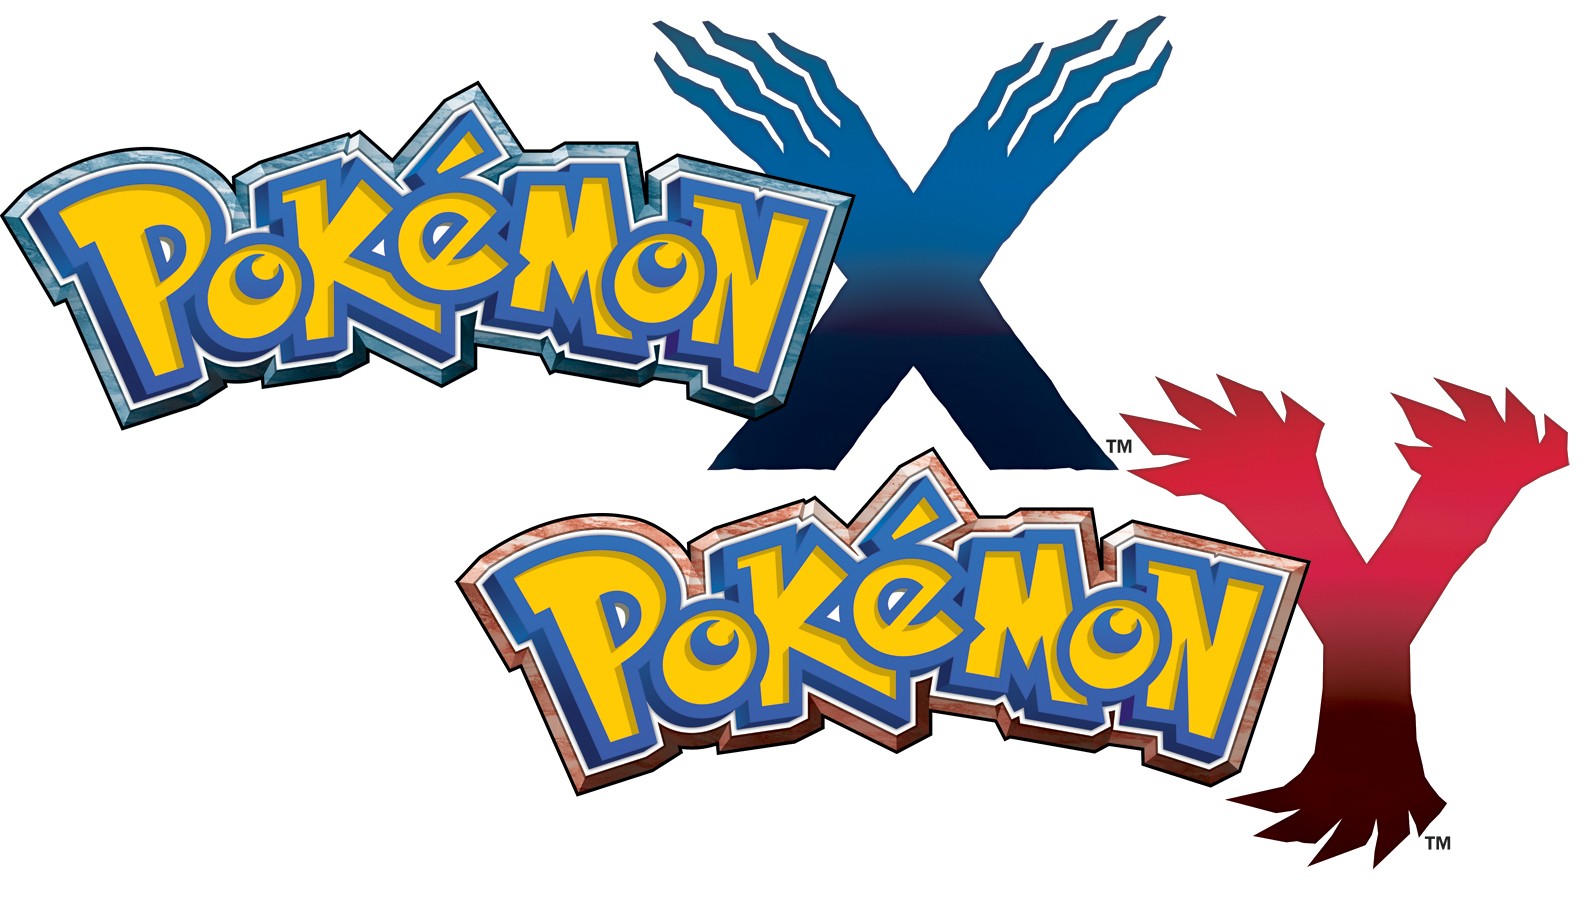 Pokemon X and Y news – Four new Pokemon